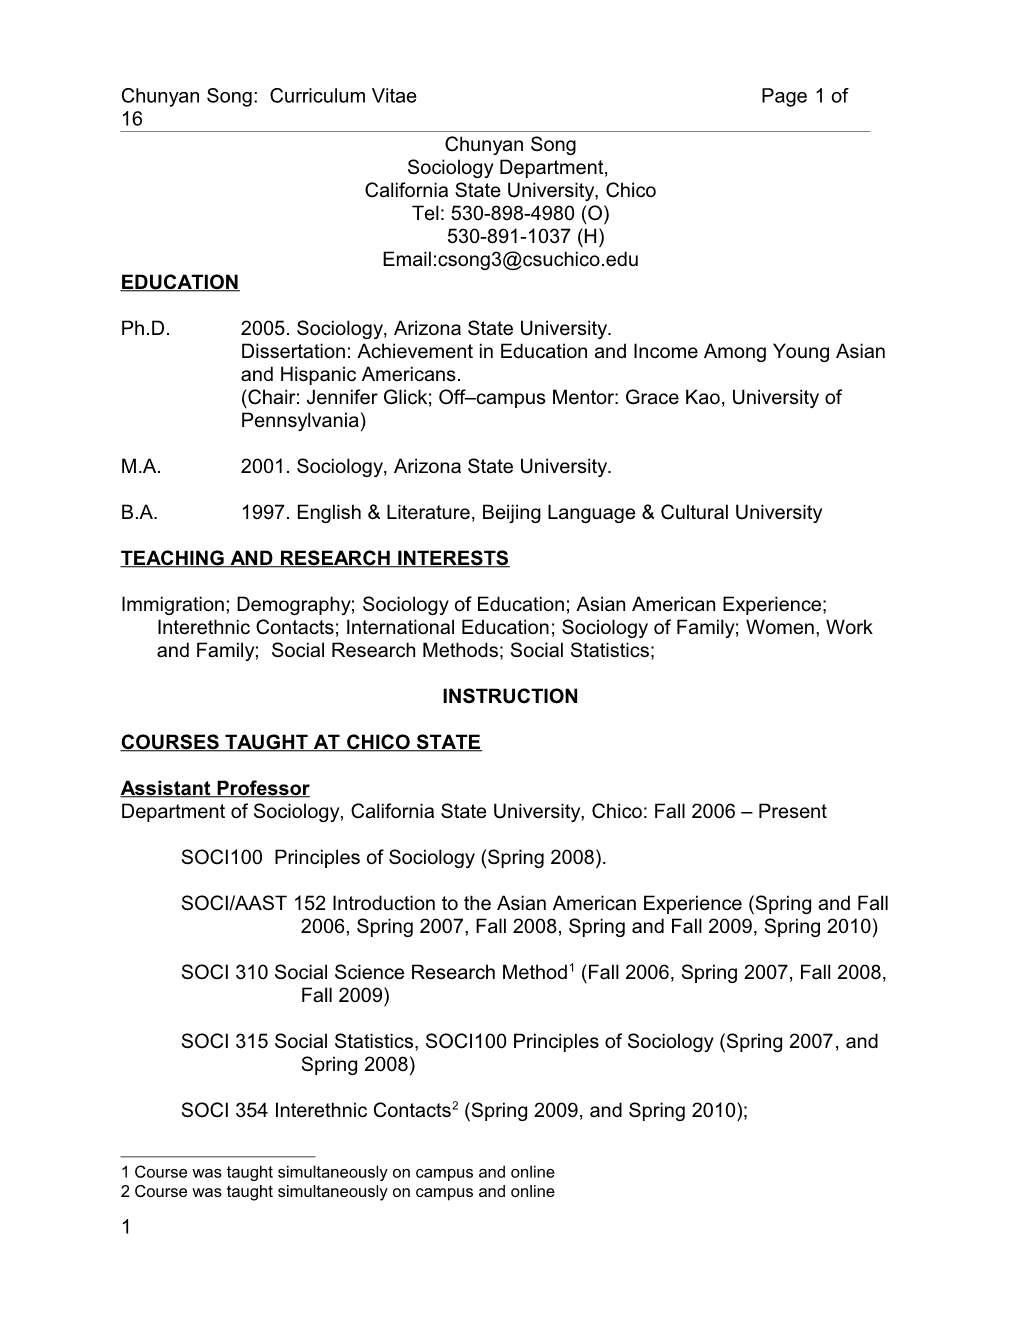 Chunyan Song: Curriculum Vitae Page 9 of 16